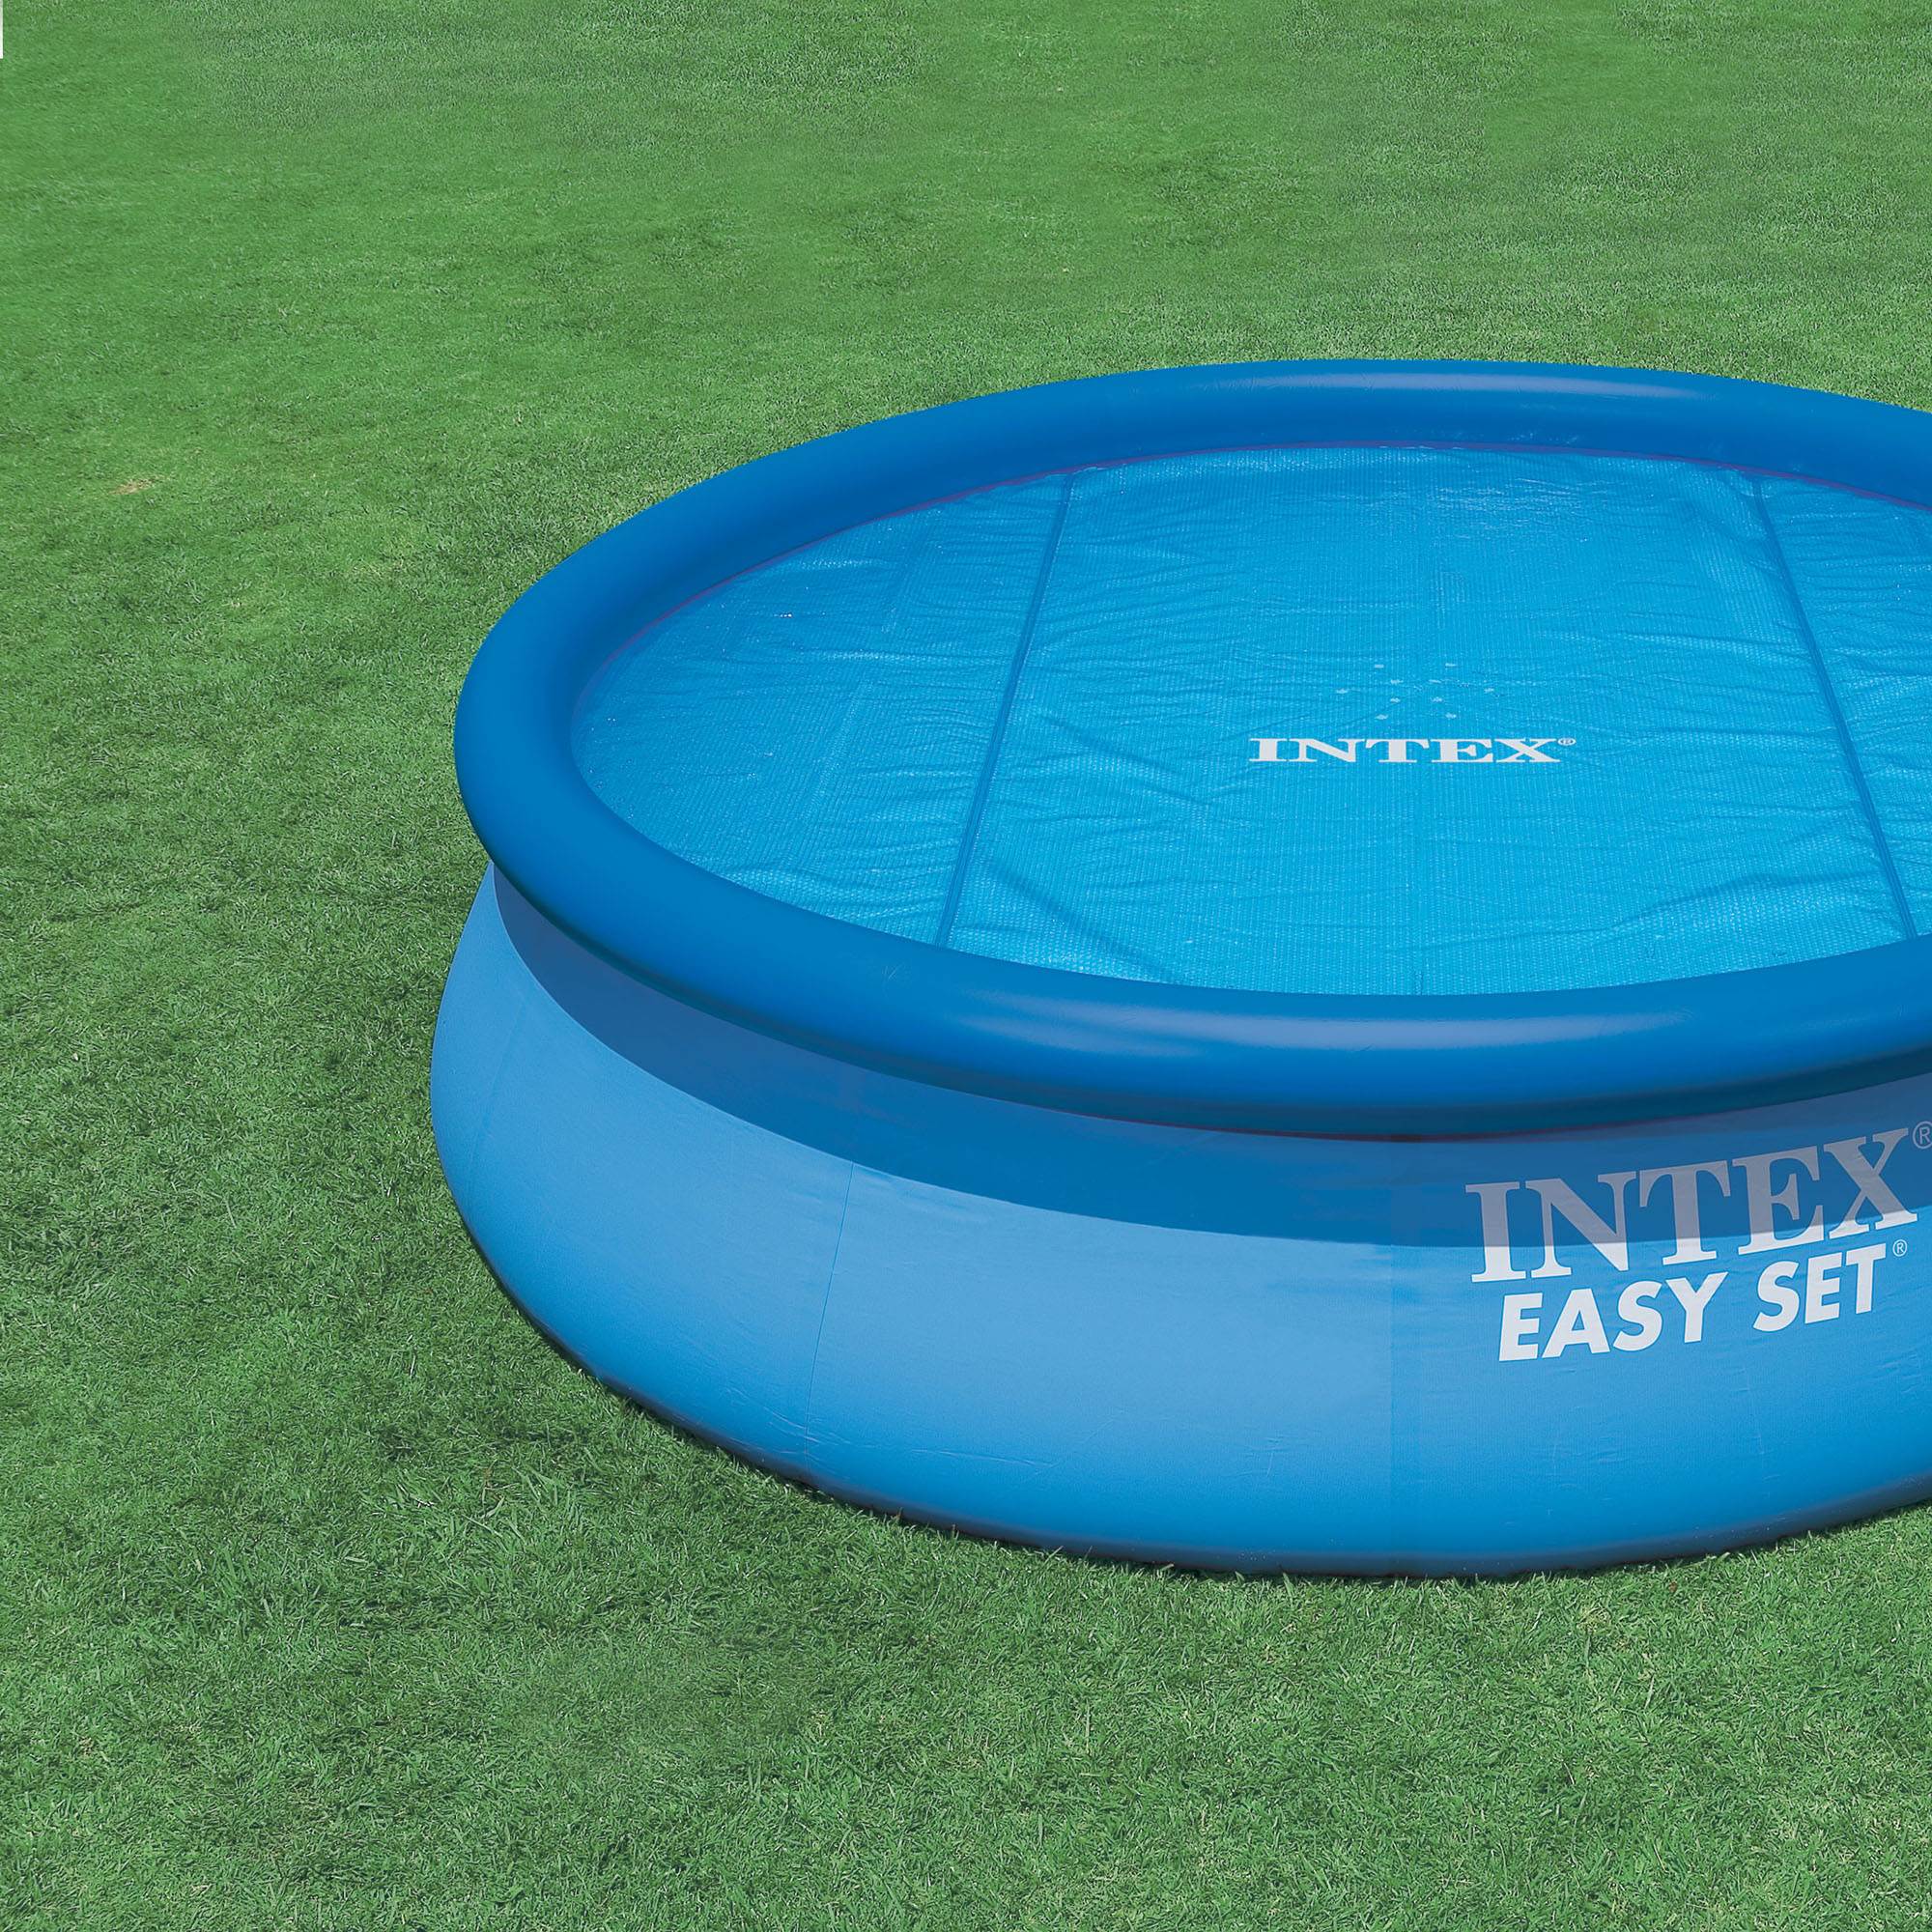 Intex 15 Foot Round Easy Set Vinyl Solar Cover for Swimming Pools, Blue 29023E 789610101078 eBay